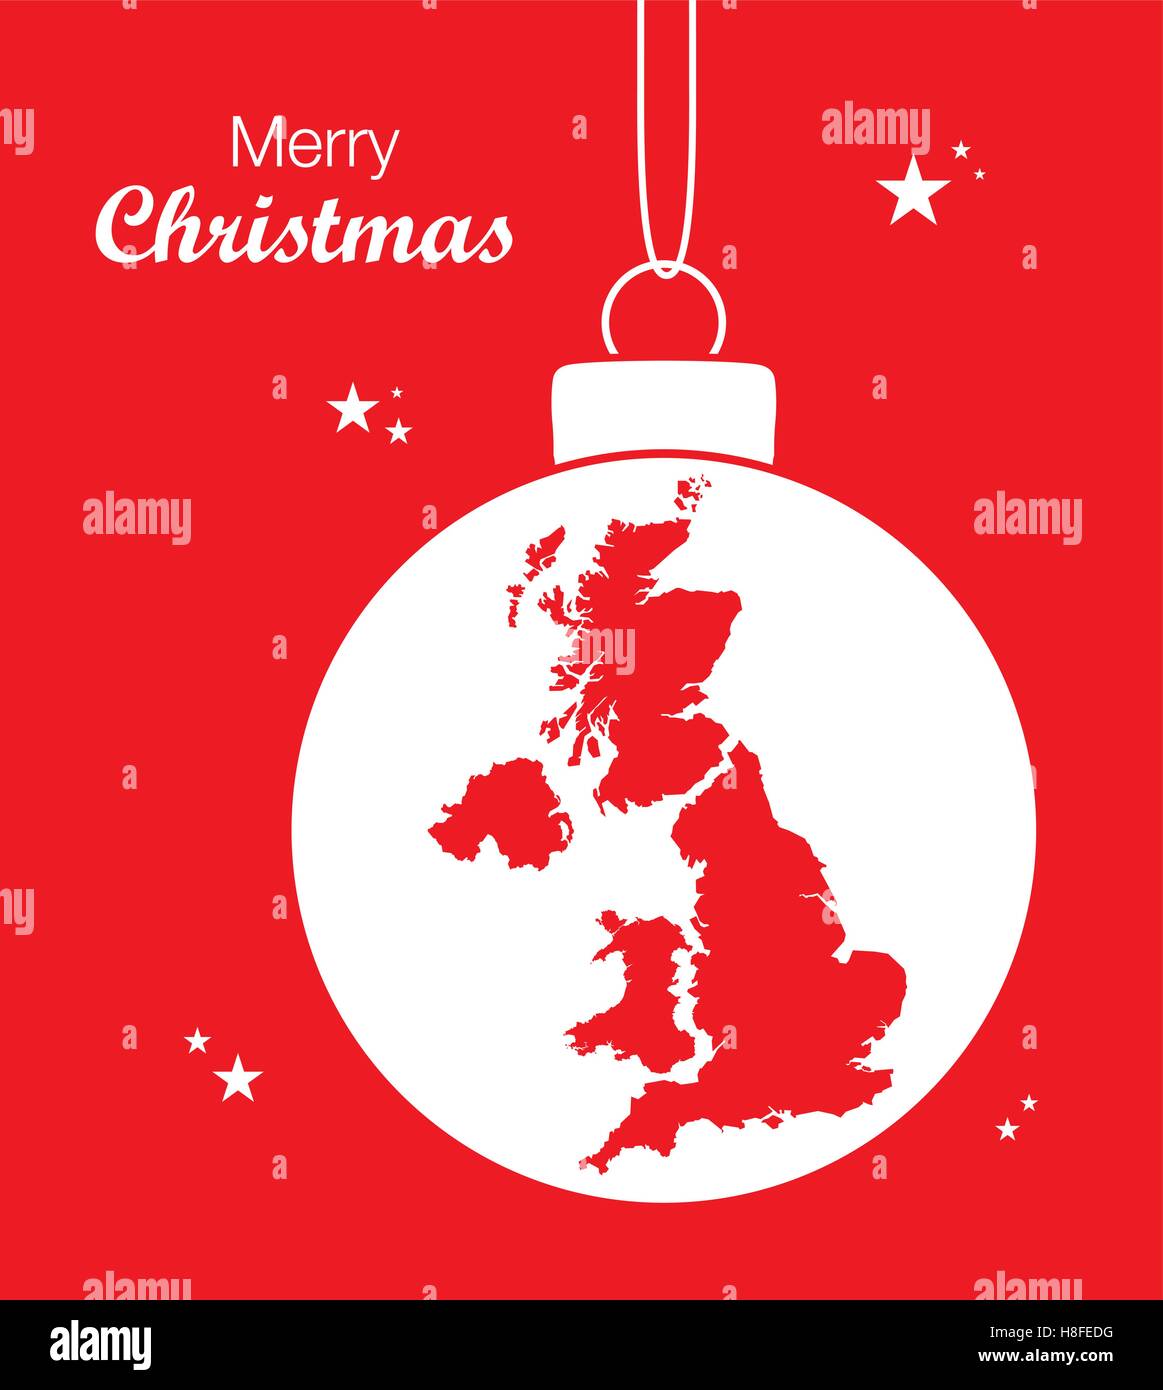 Merry Christmas Map United Kingdom Stock Vector